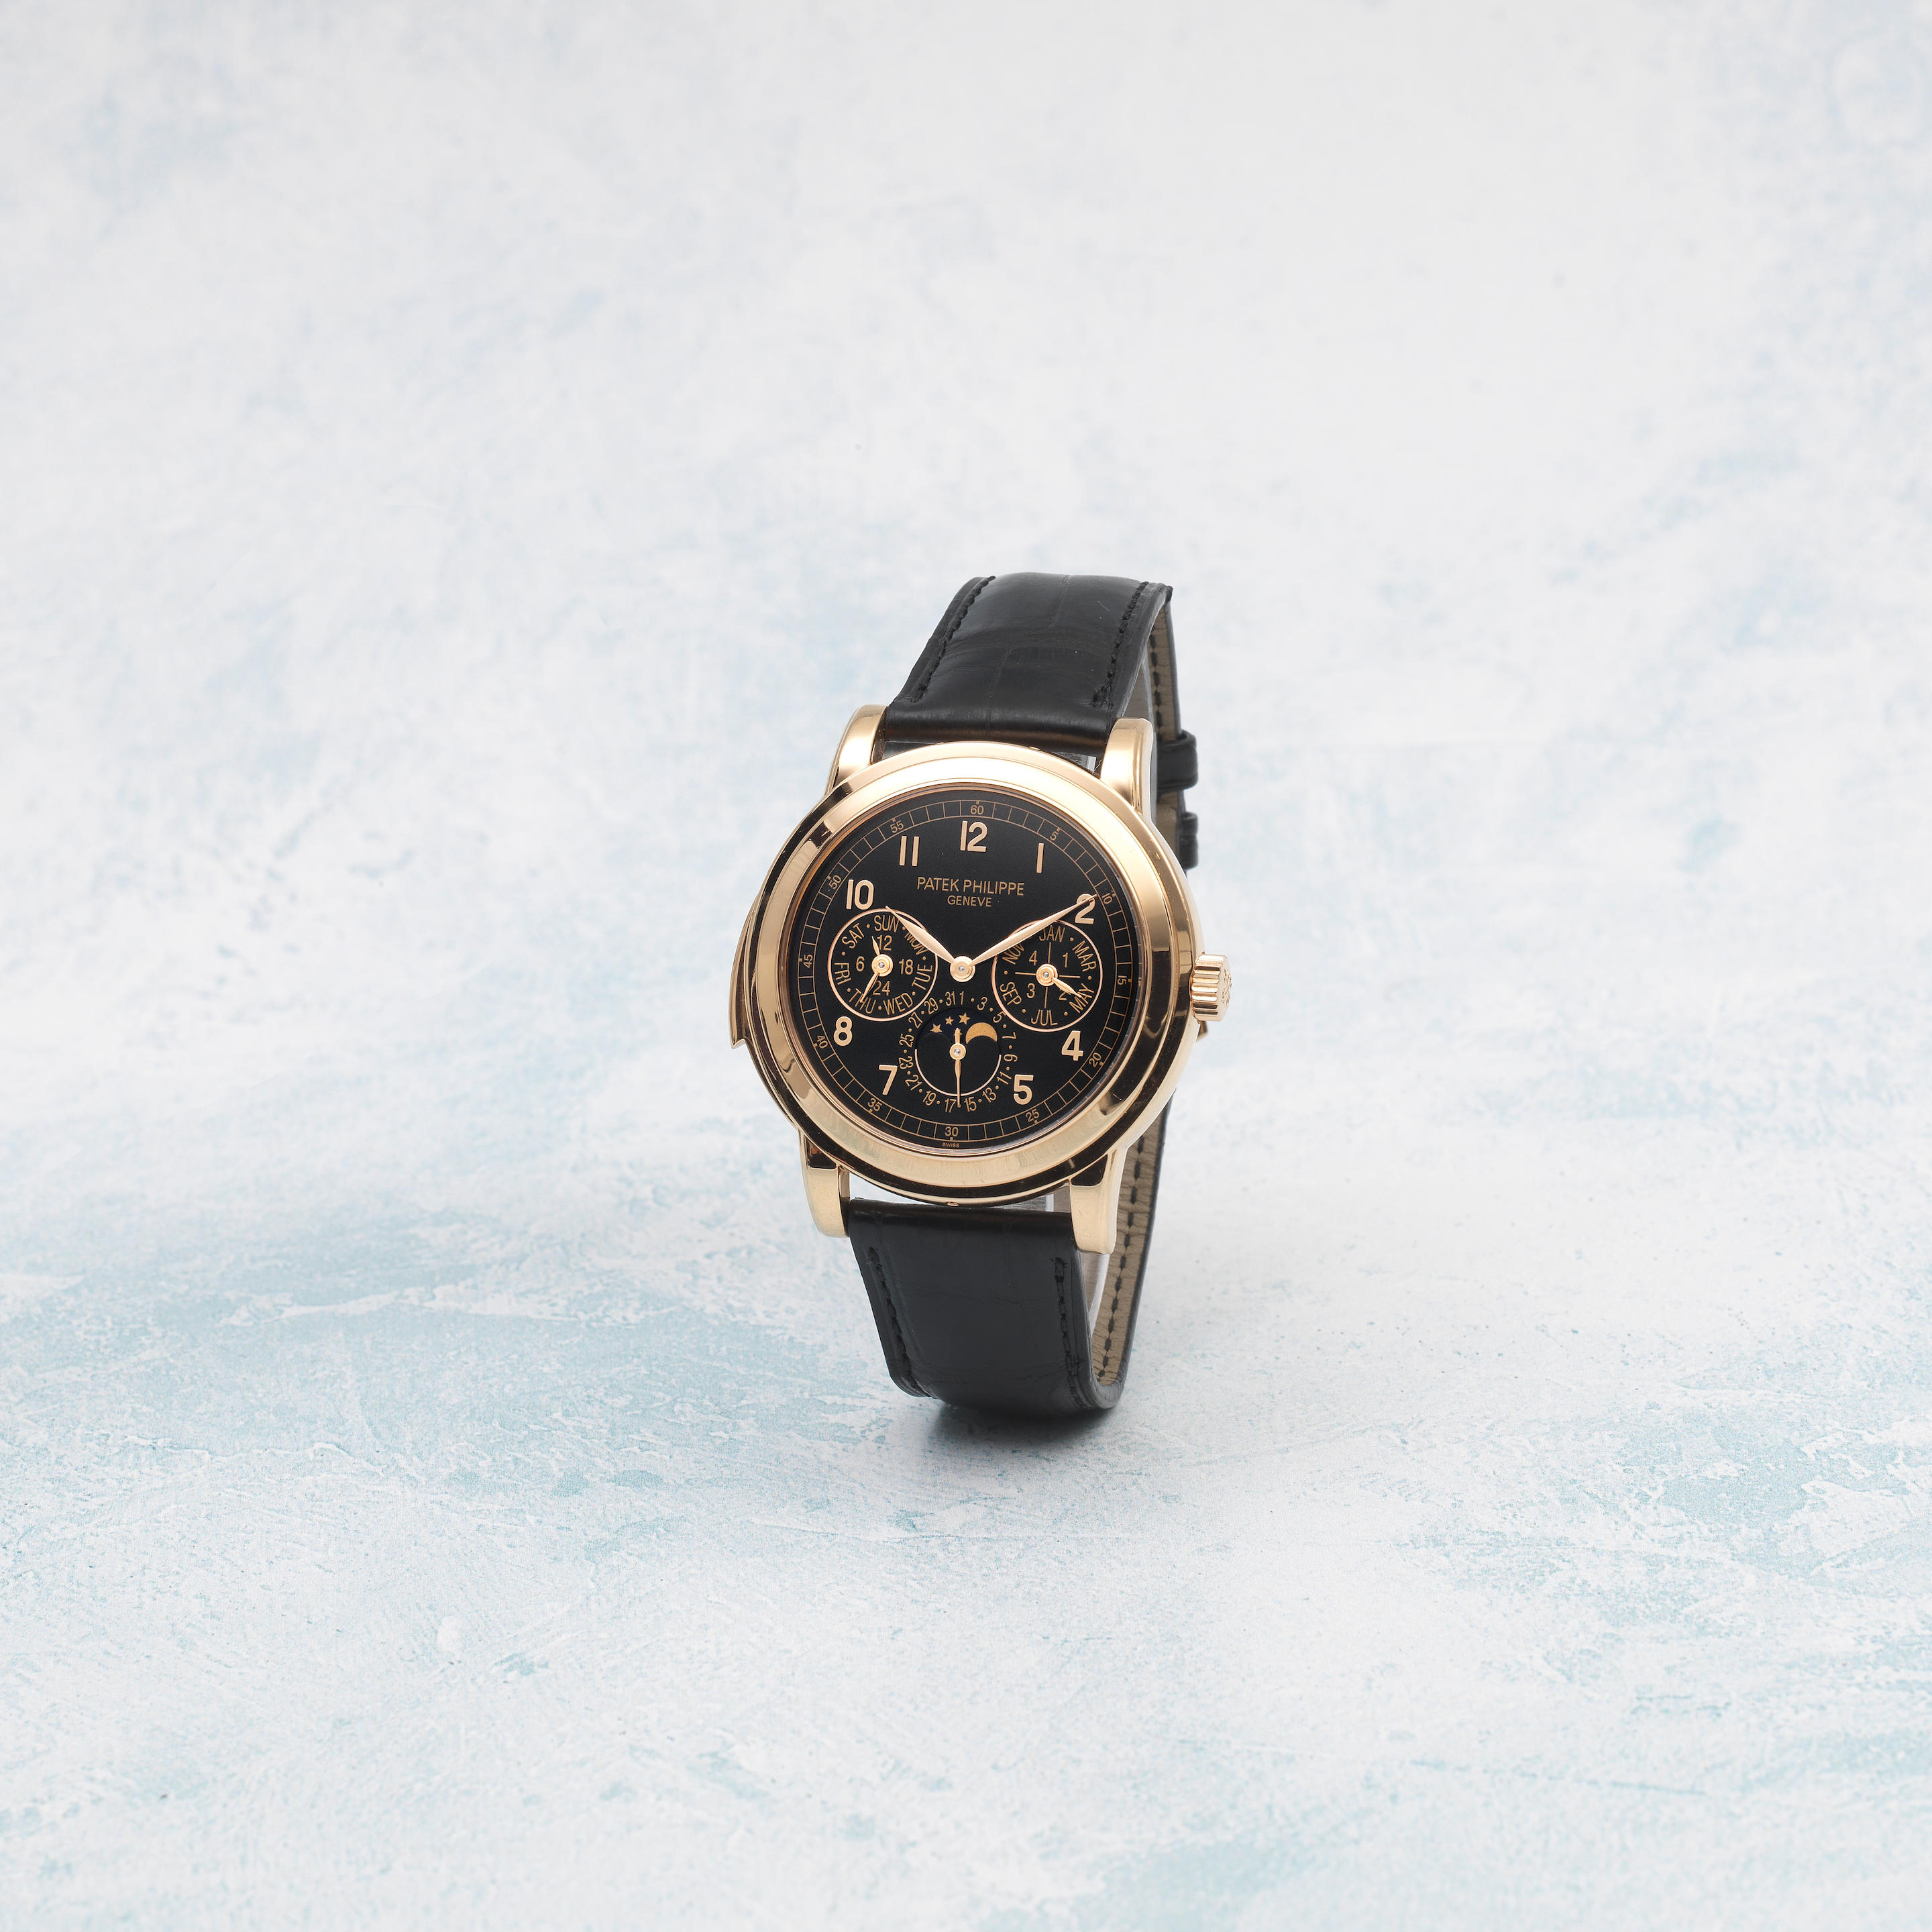 Louis Vuitton watch Price- 9k